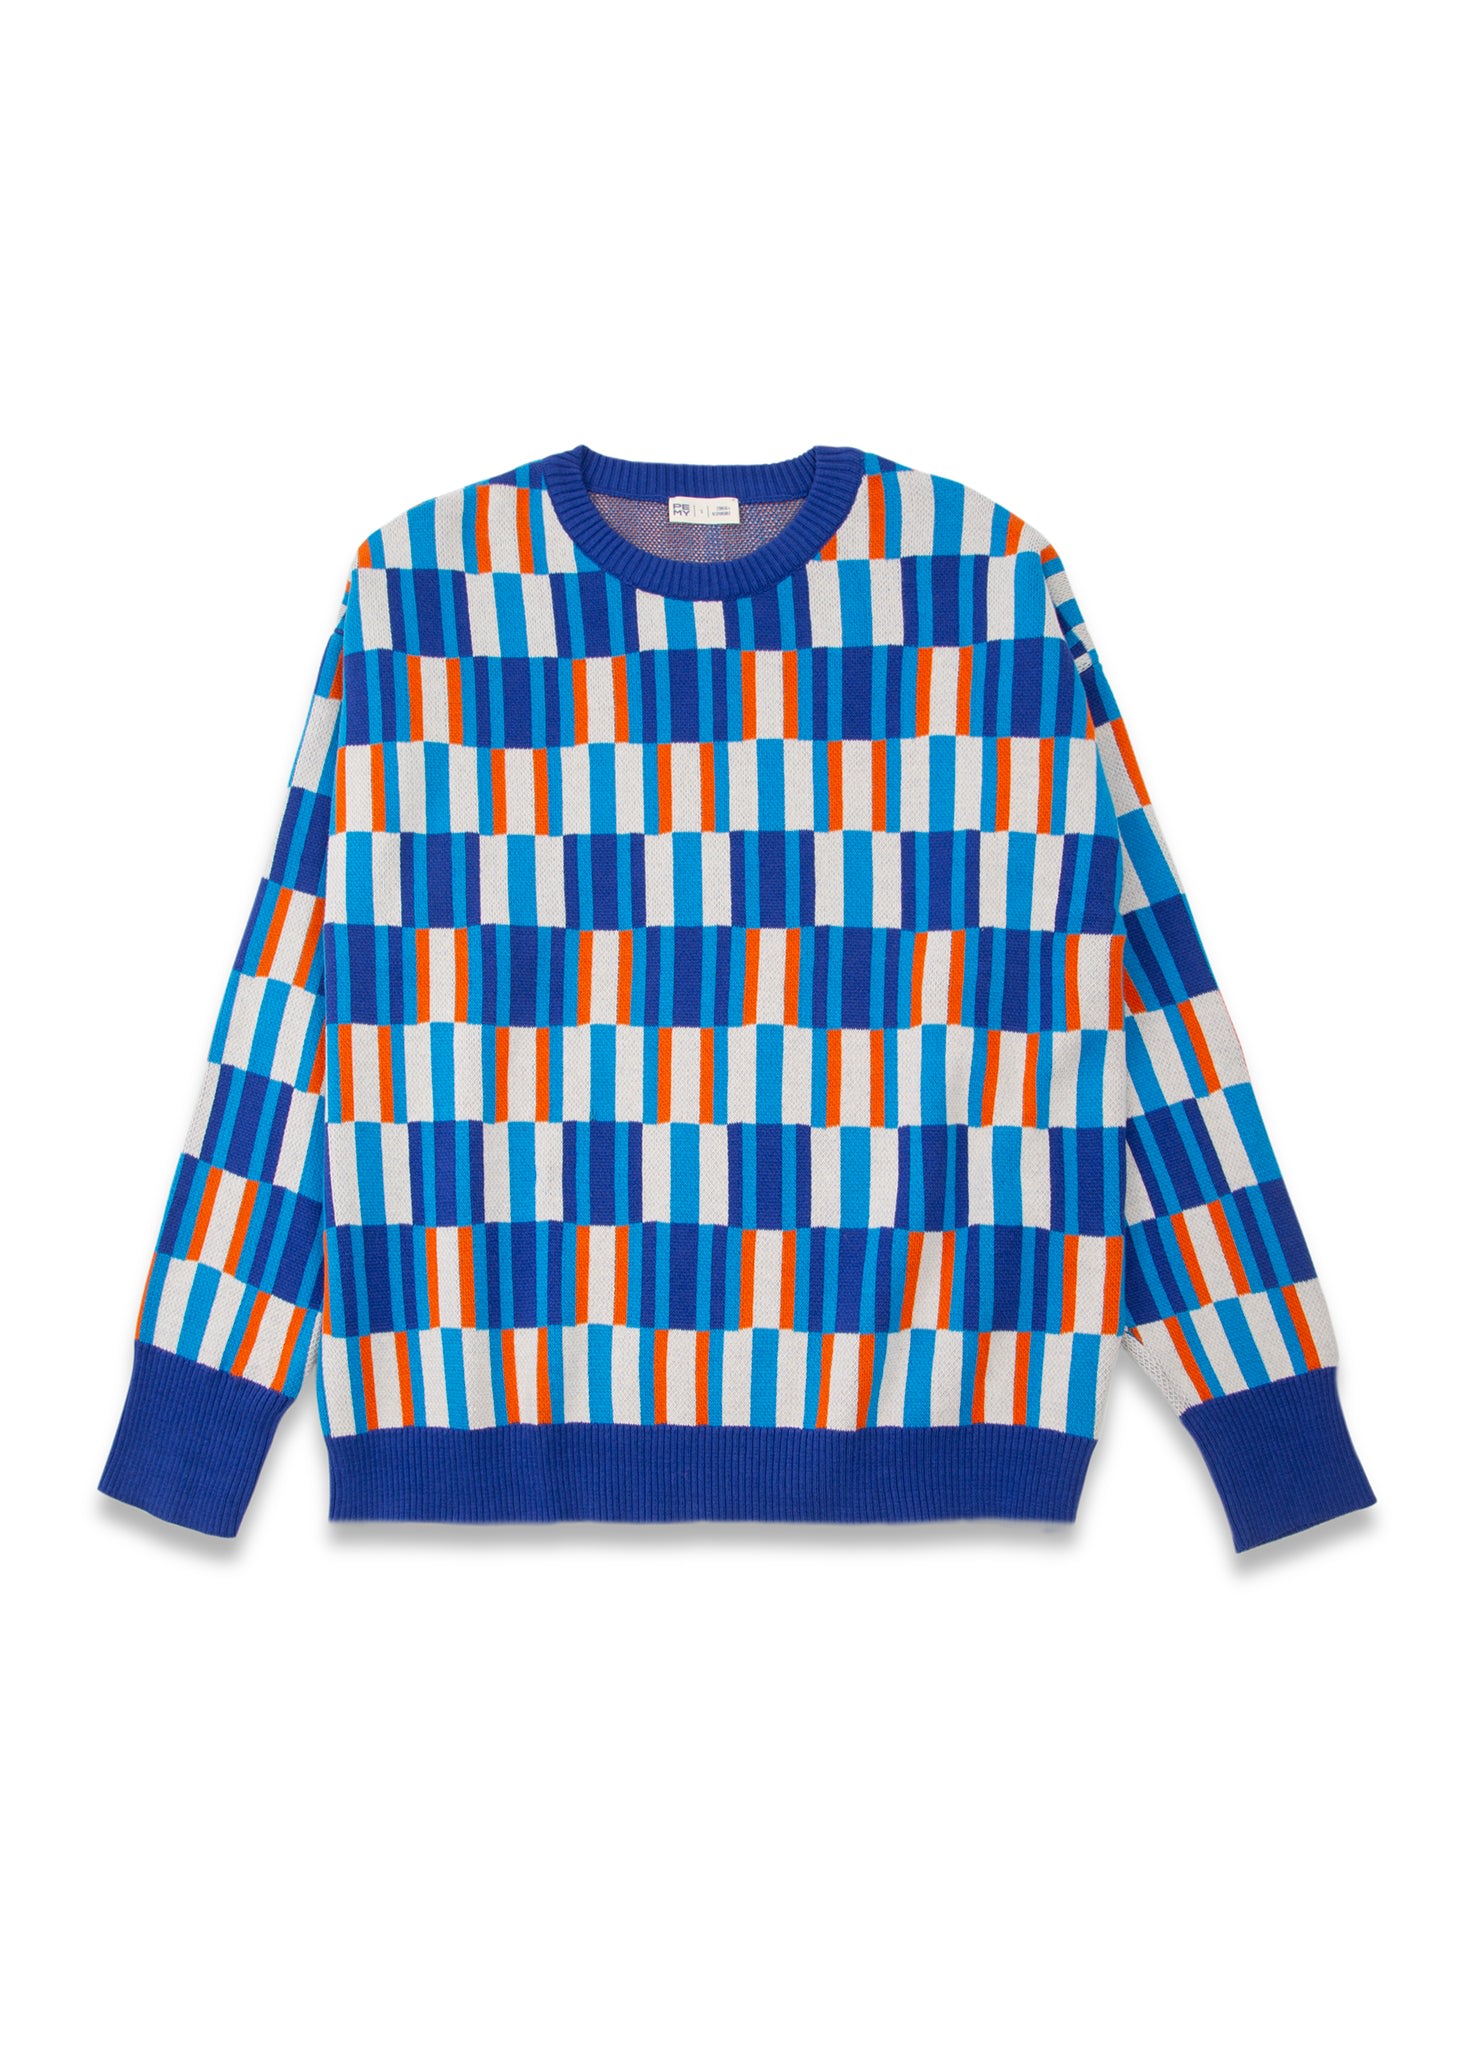 Women’s Yellow / Orange / Blue Pieces Oversize Jacquard Cotton Knit Sweater Small Pemy